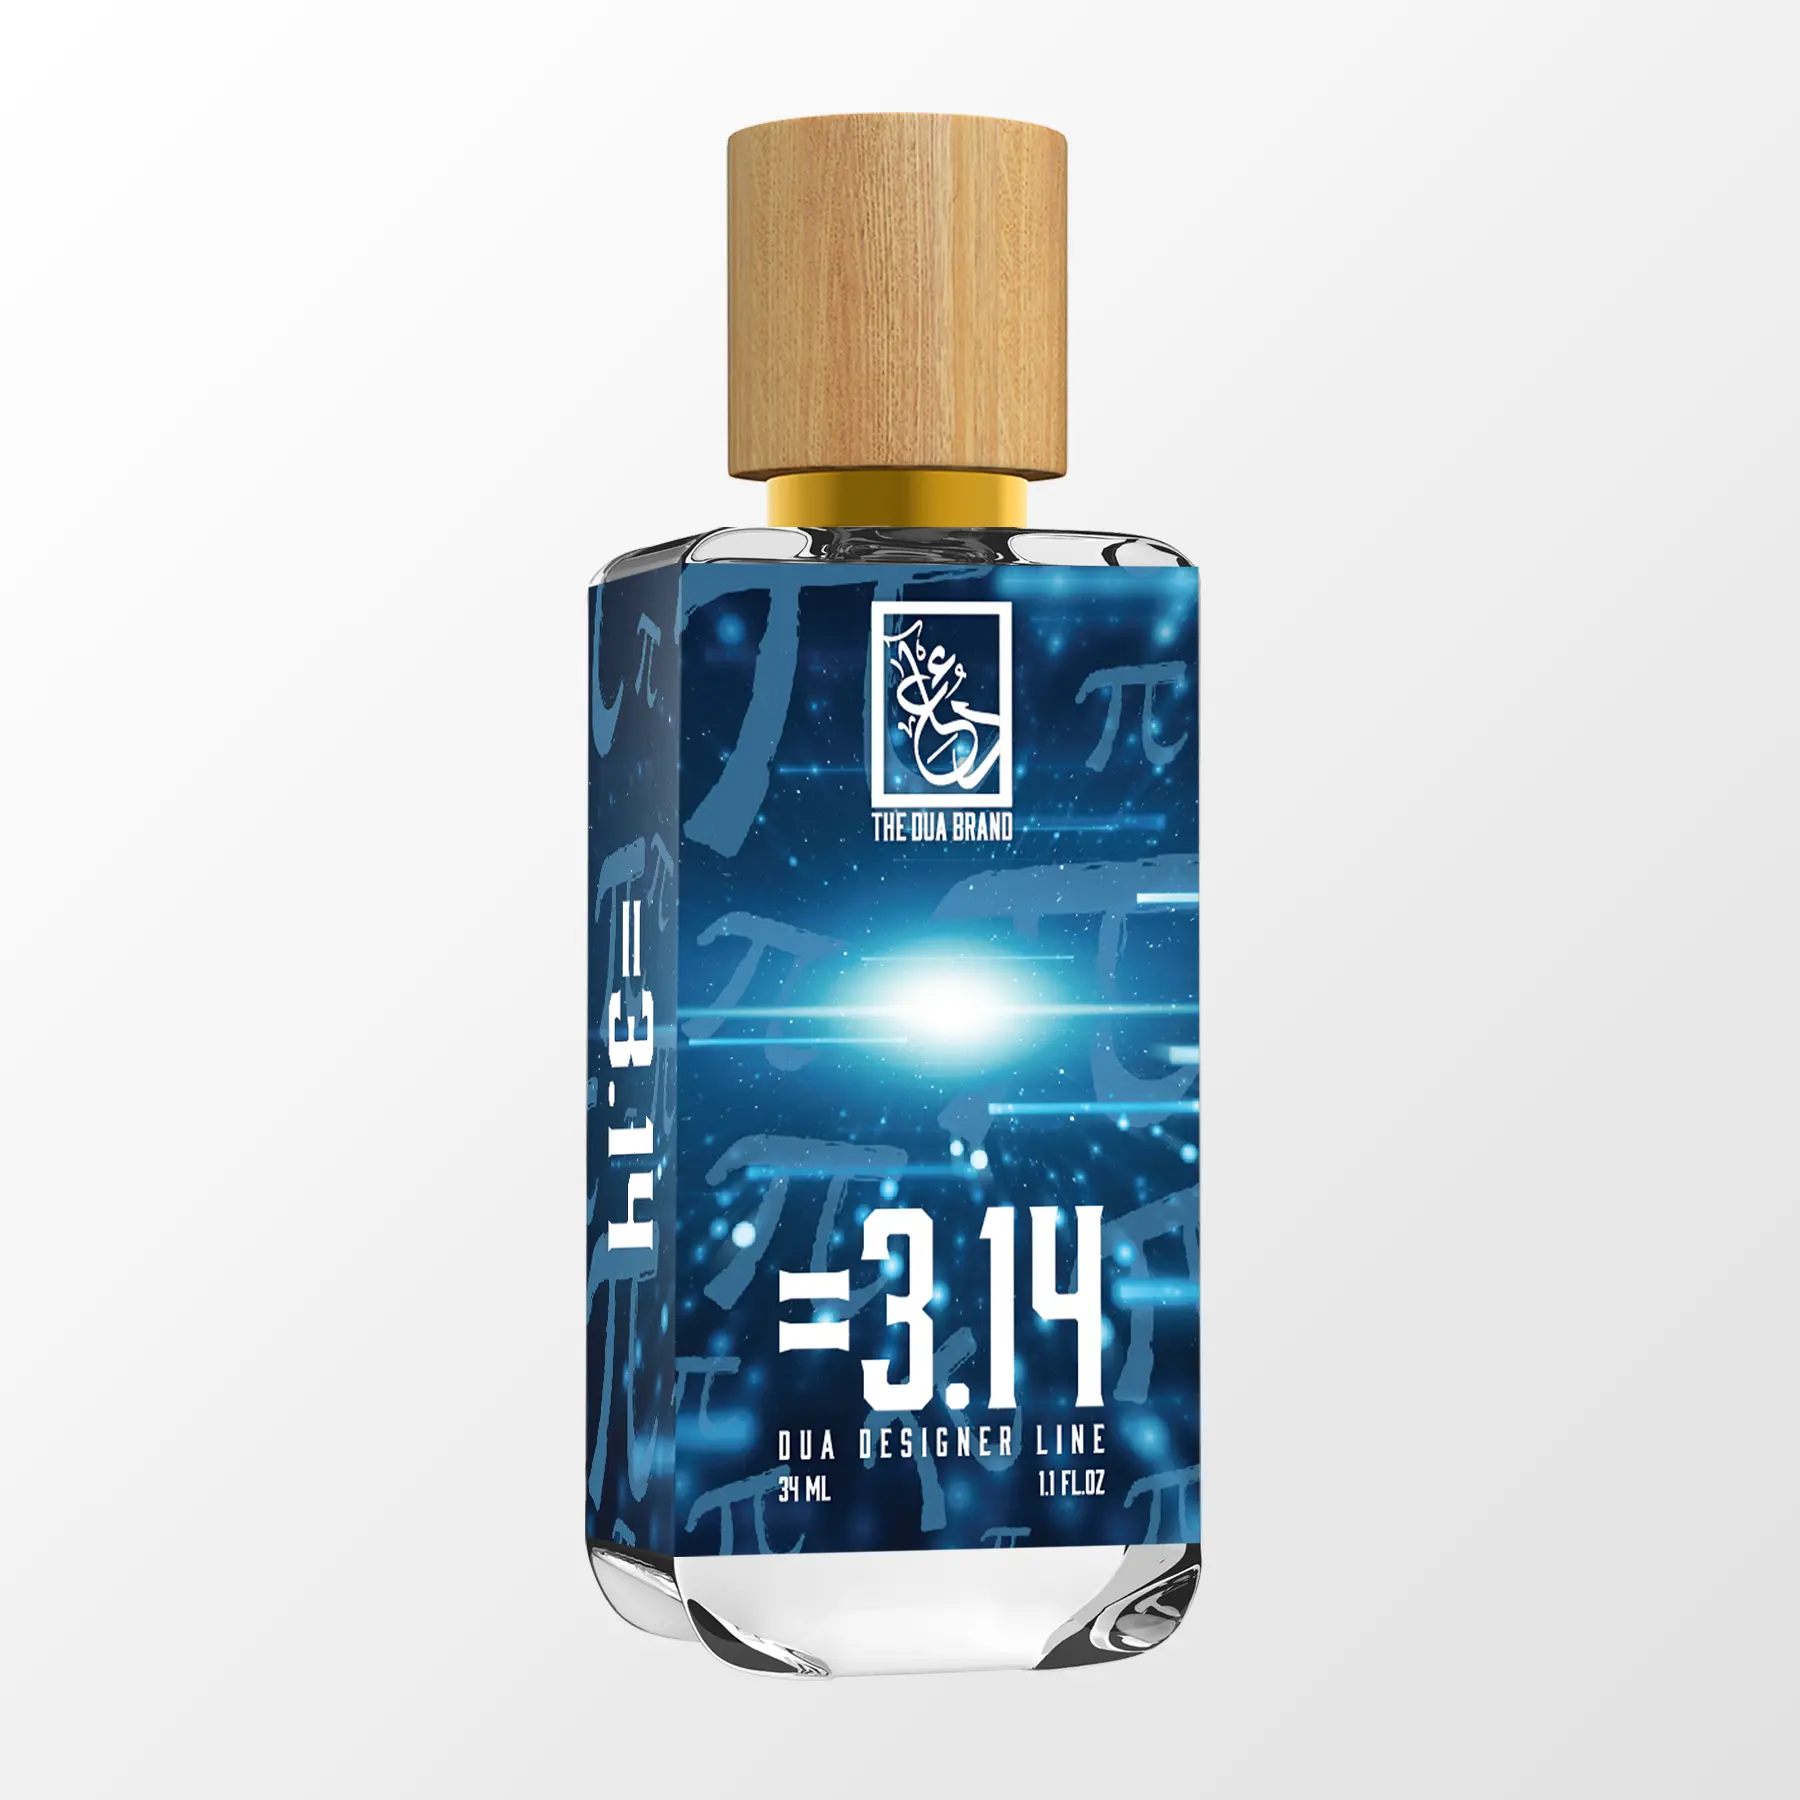 Free Bleu de Chanel Fragrance Sample